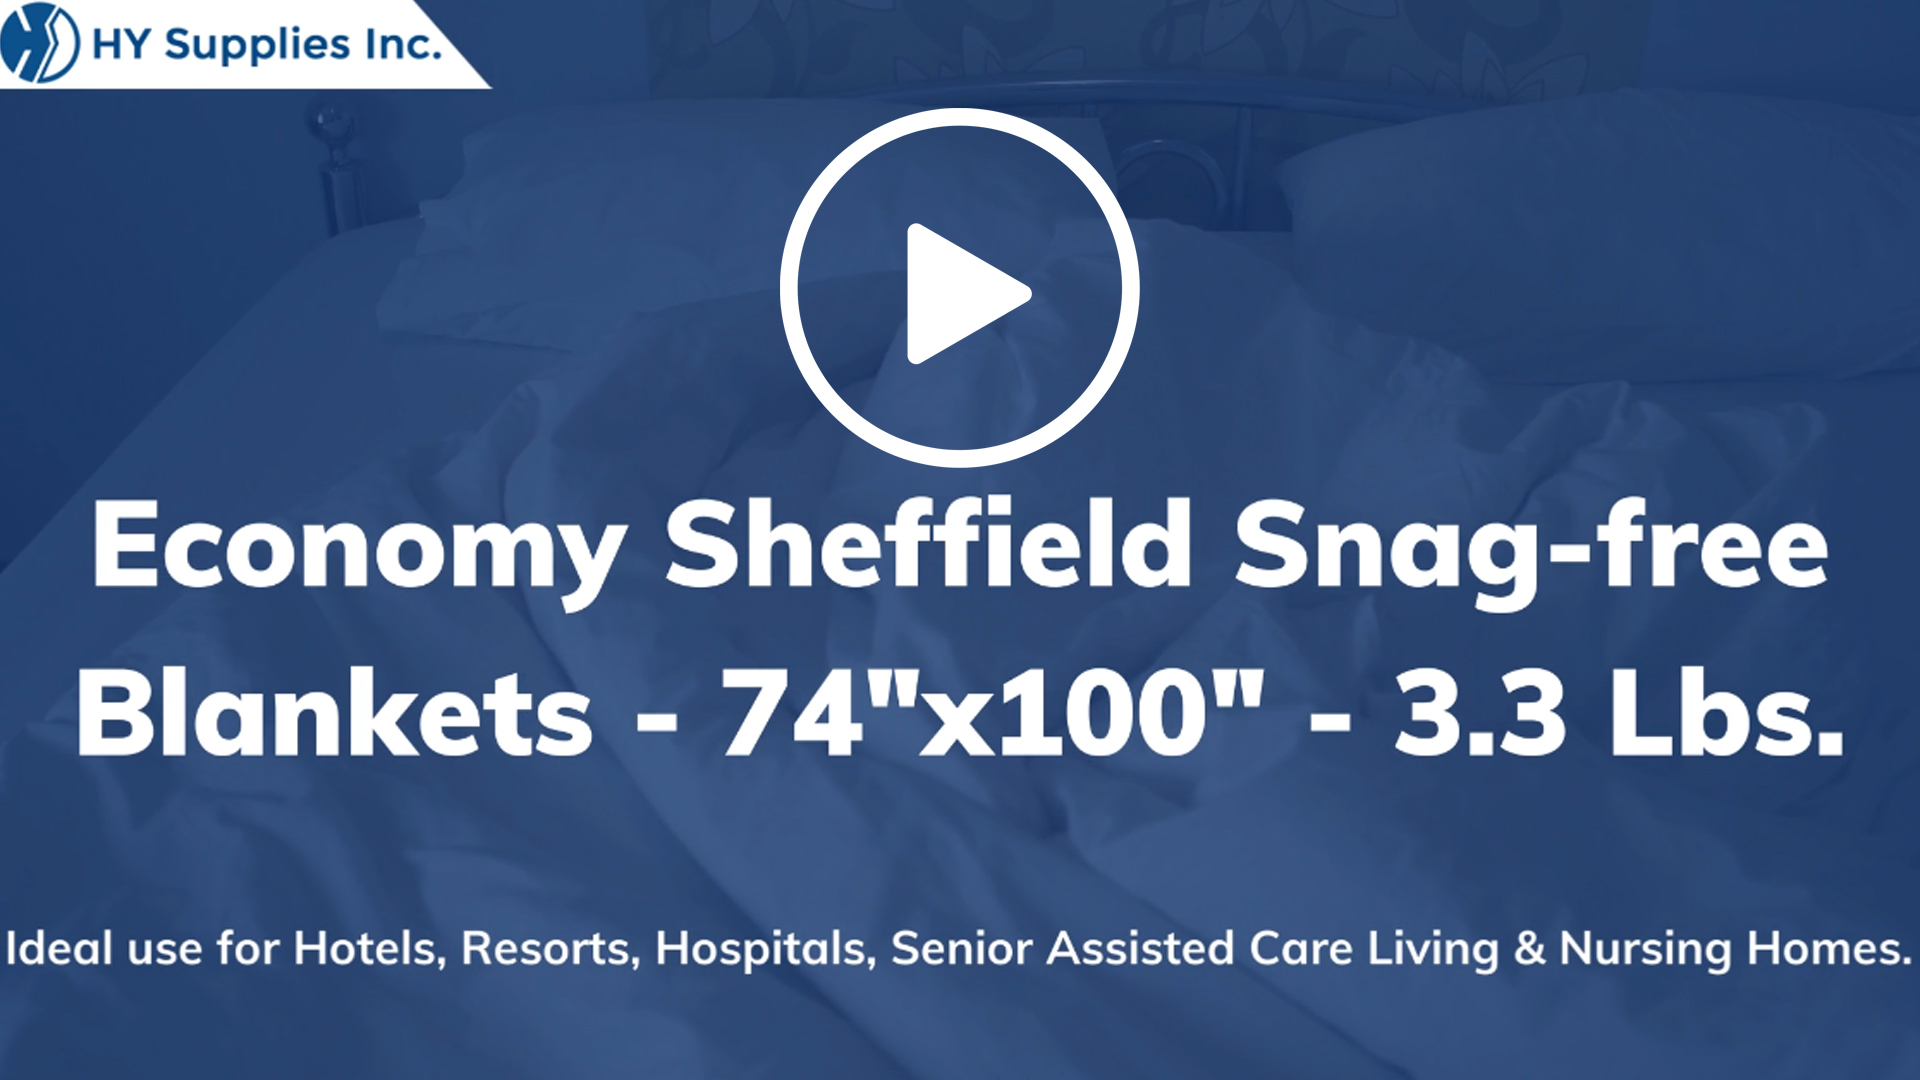 Economy Sheffield Snag-free Blankets - 74"x100" - 3.3 Lbs.